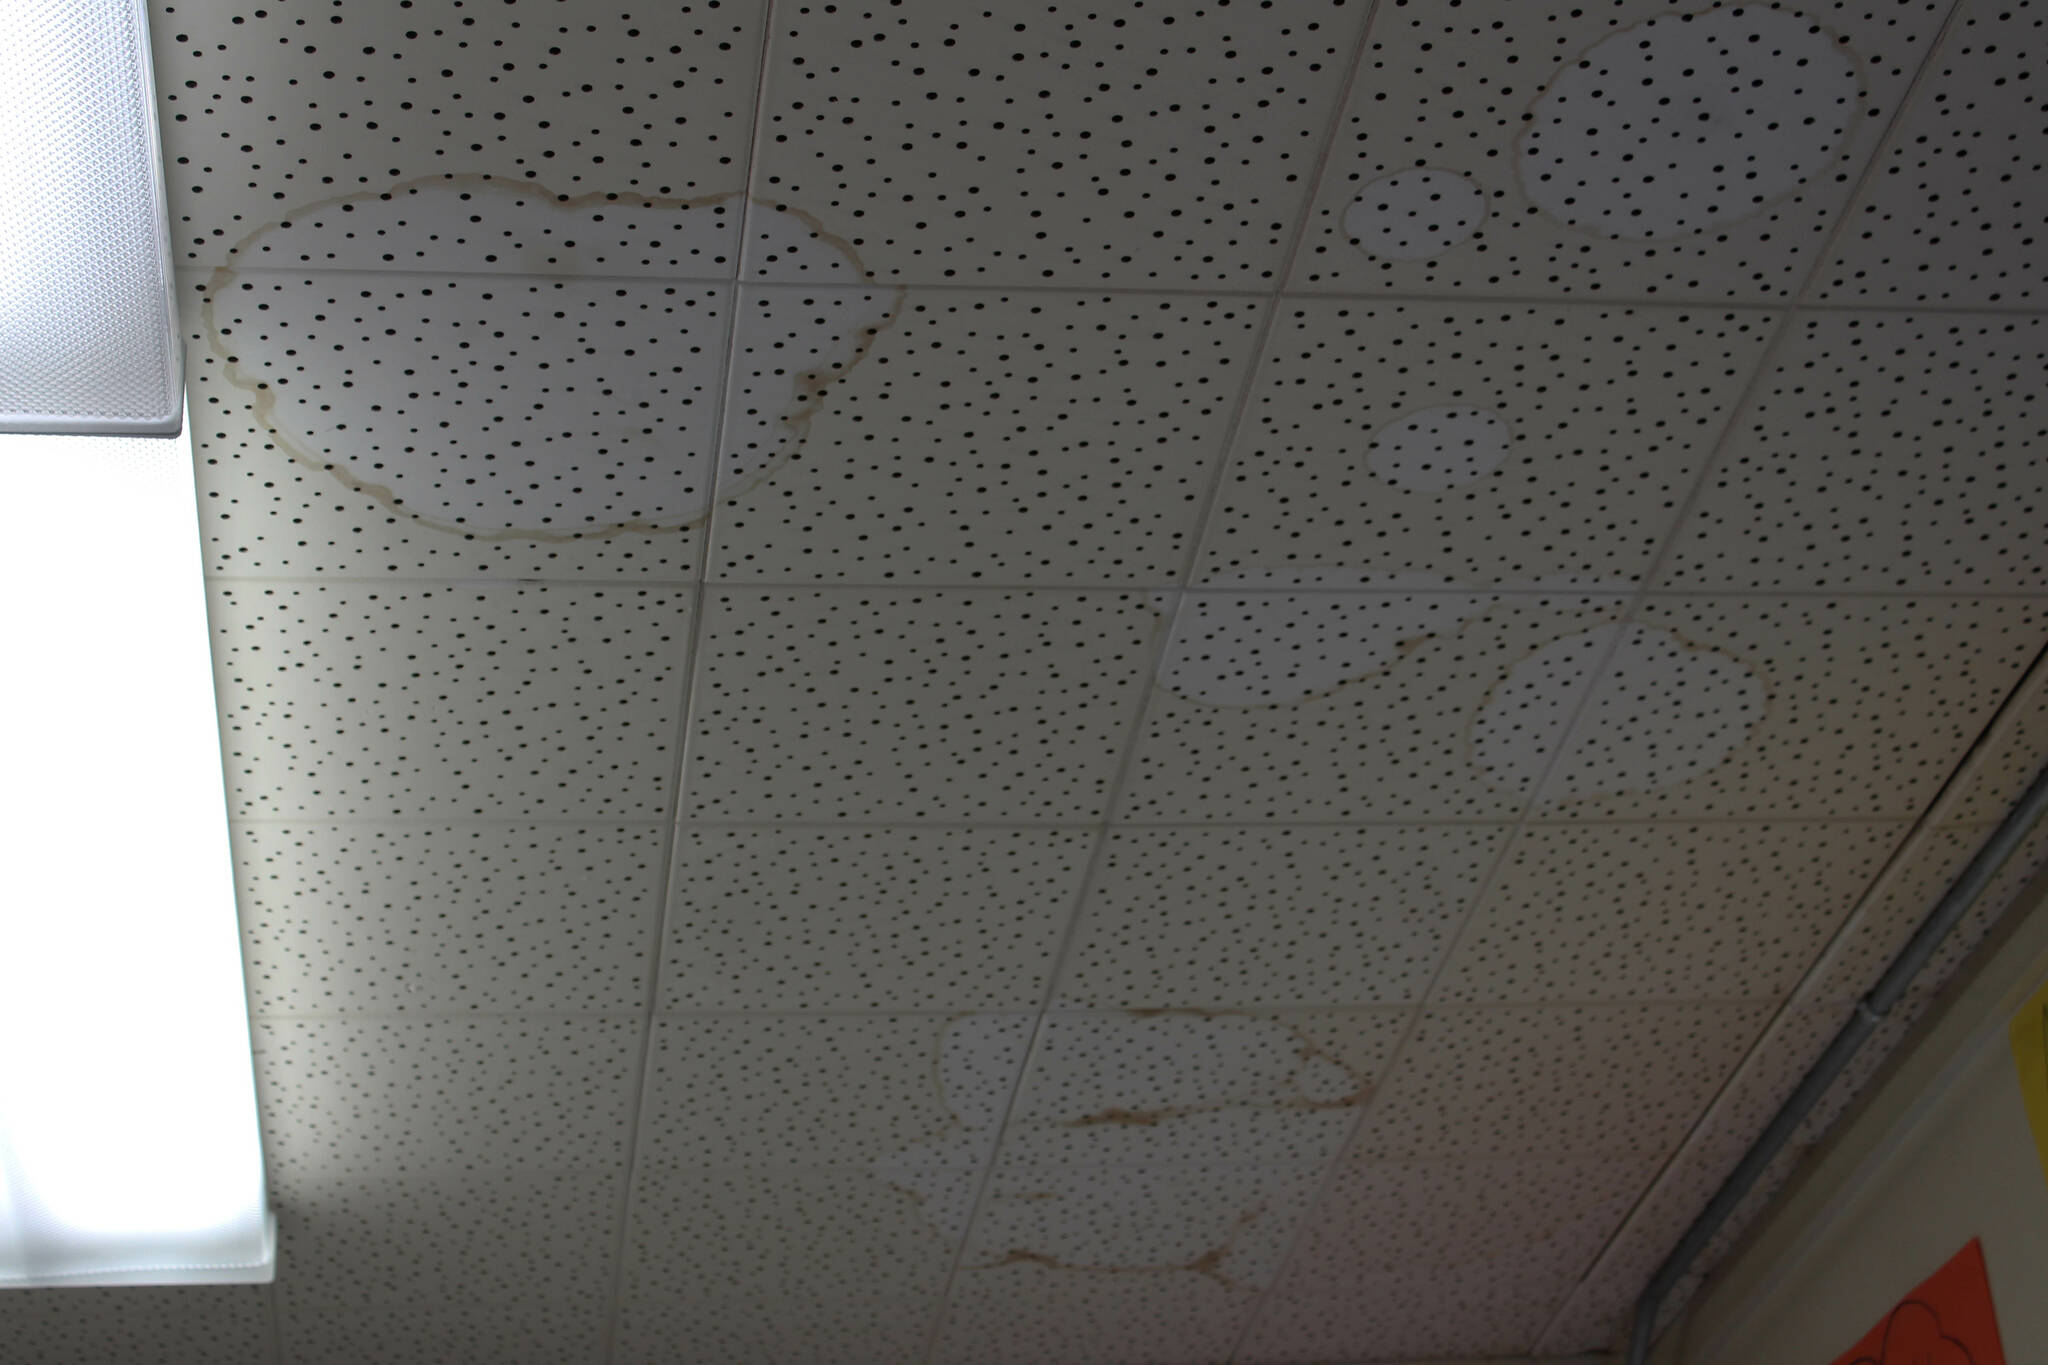 Watermarks stain ceiling panels at Soldotna Elementary School on Friday, Sept. 30, 2022, in Soldotna, Alaska. (Ashlyn O’Hara/Peninsula Clarion)